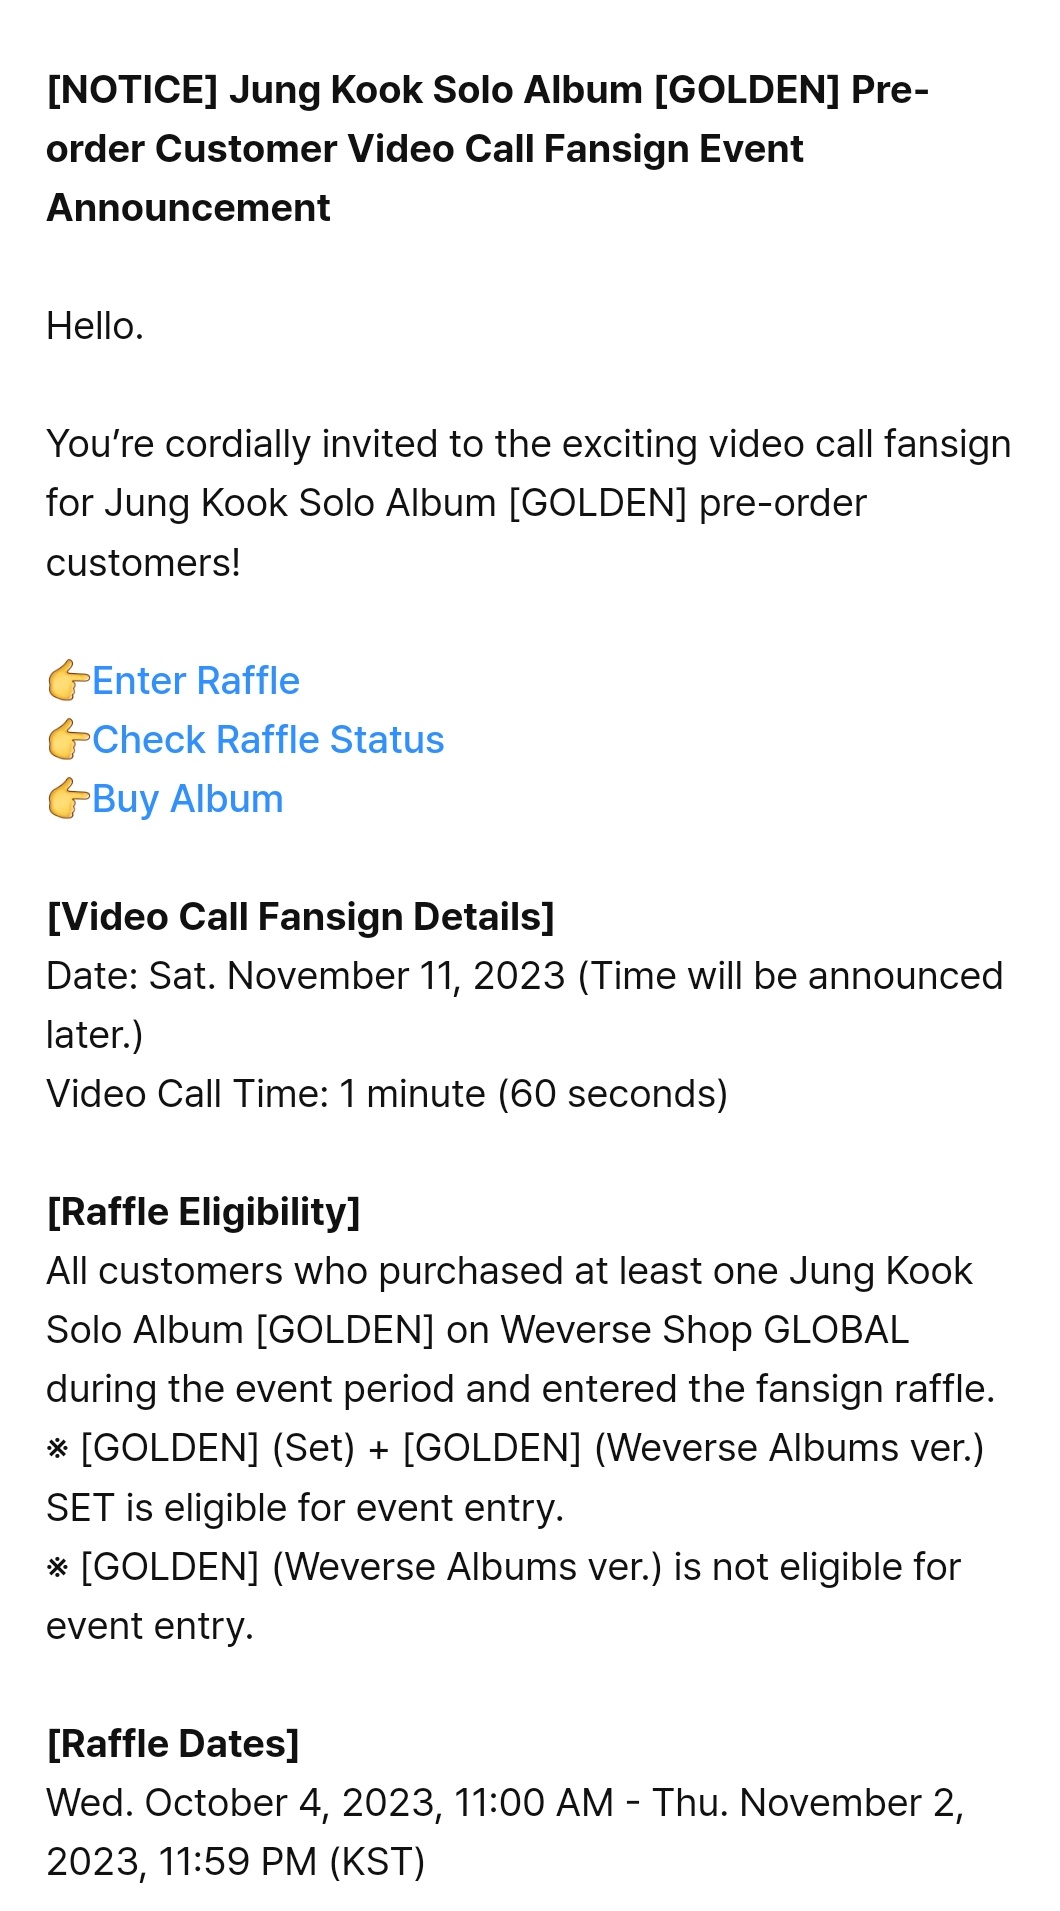 BTS Jungkook - Solo Album Golden (Weverse Albums Ver.)